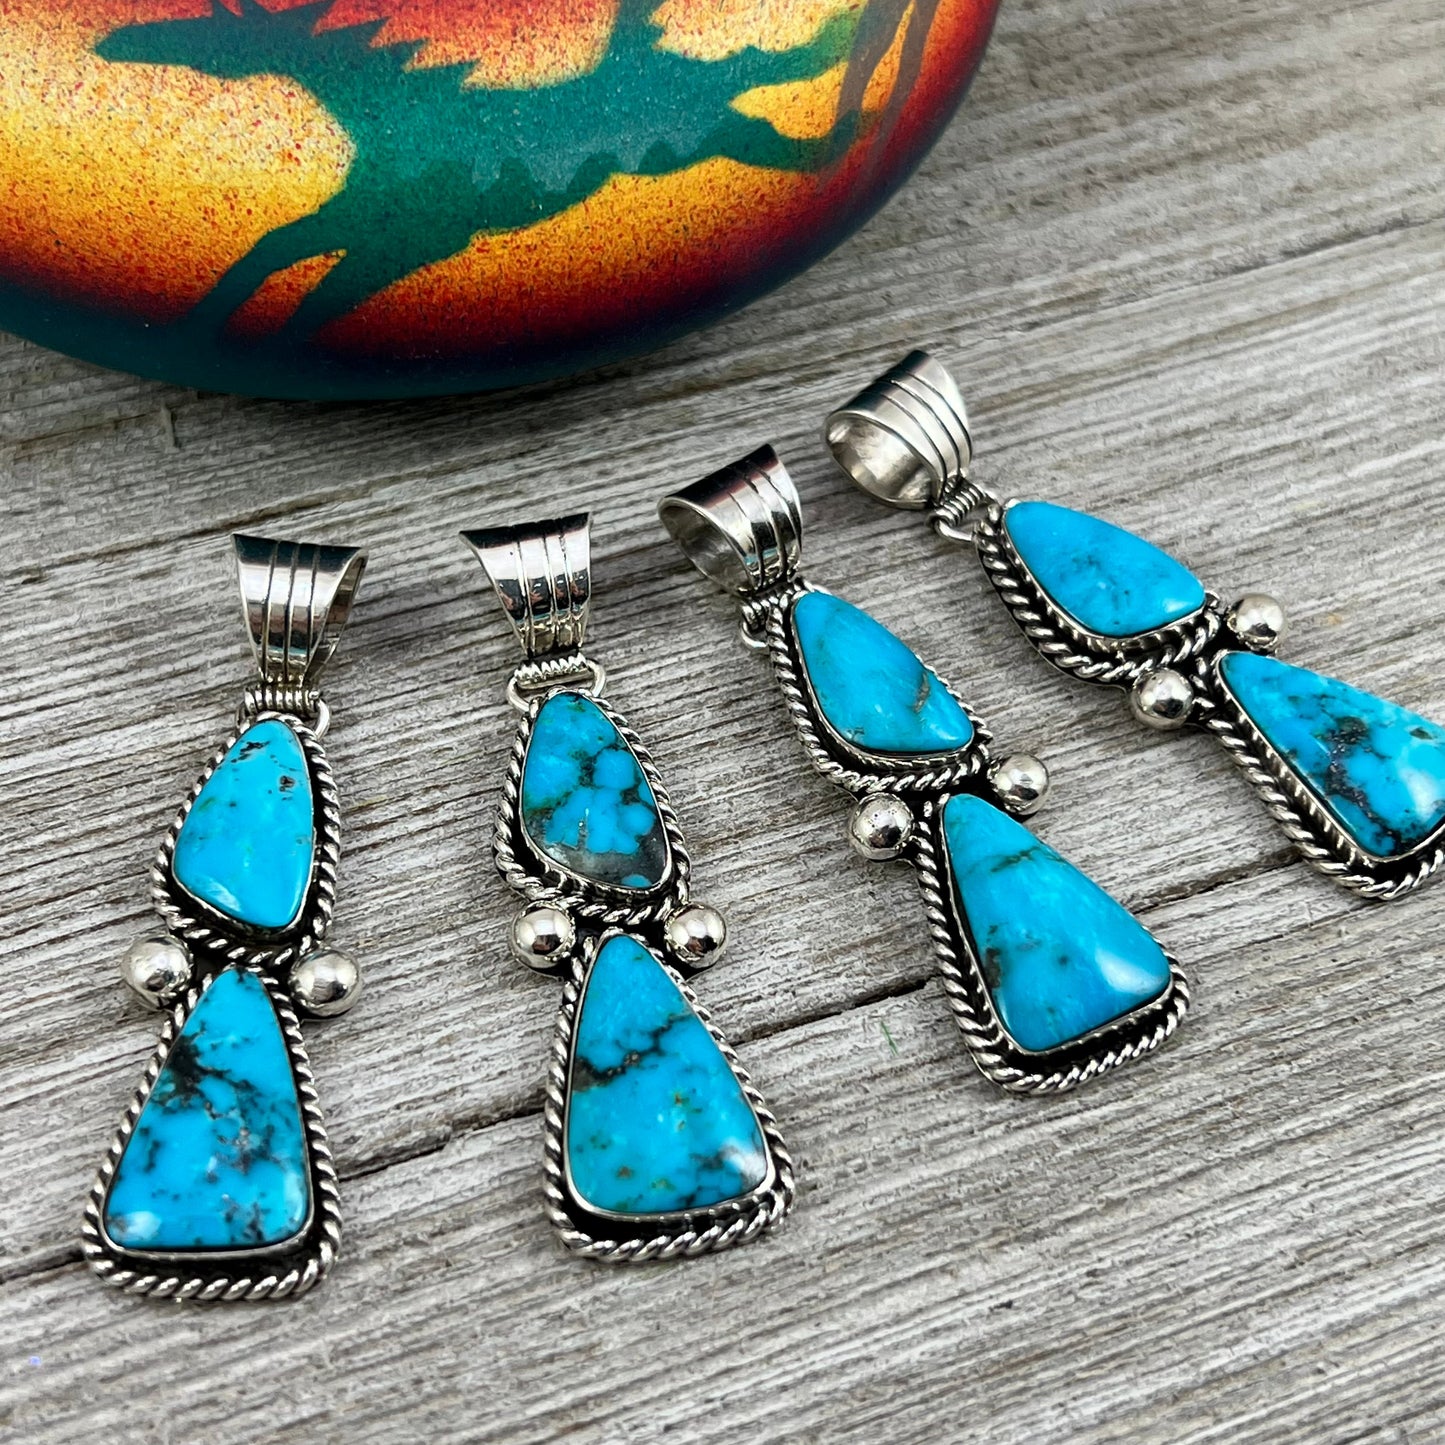 Blue Campitos turquoise with matrix pendant #4, Navajo handmade Daniel Dakai, sterling silver